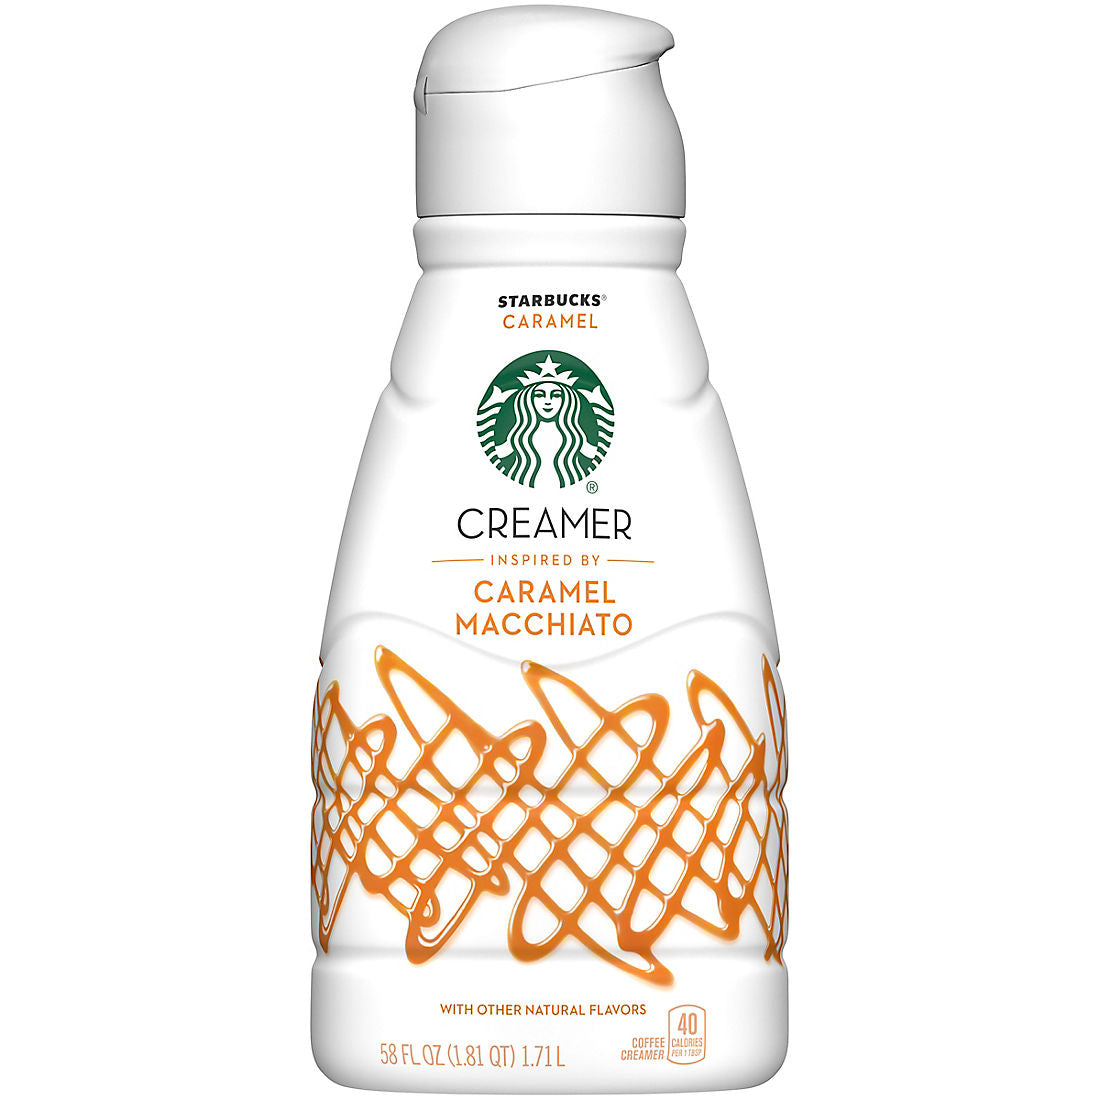 Starbucks Caramel Macchiato Creamer, 58 oz.